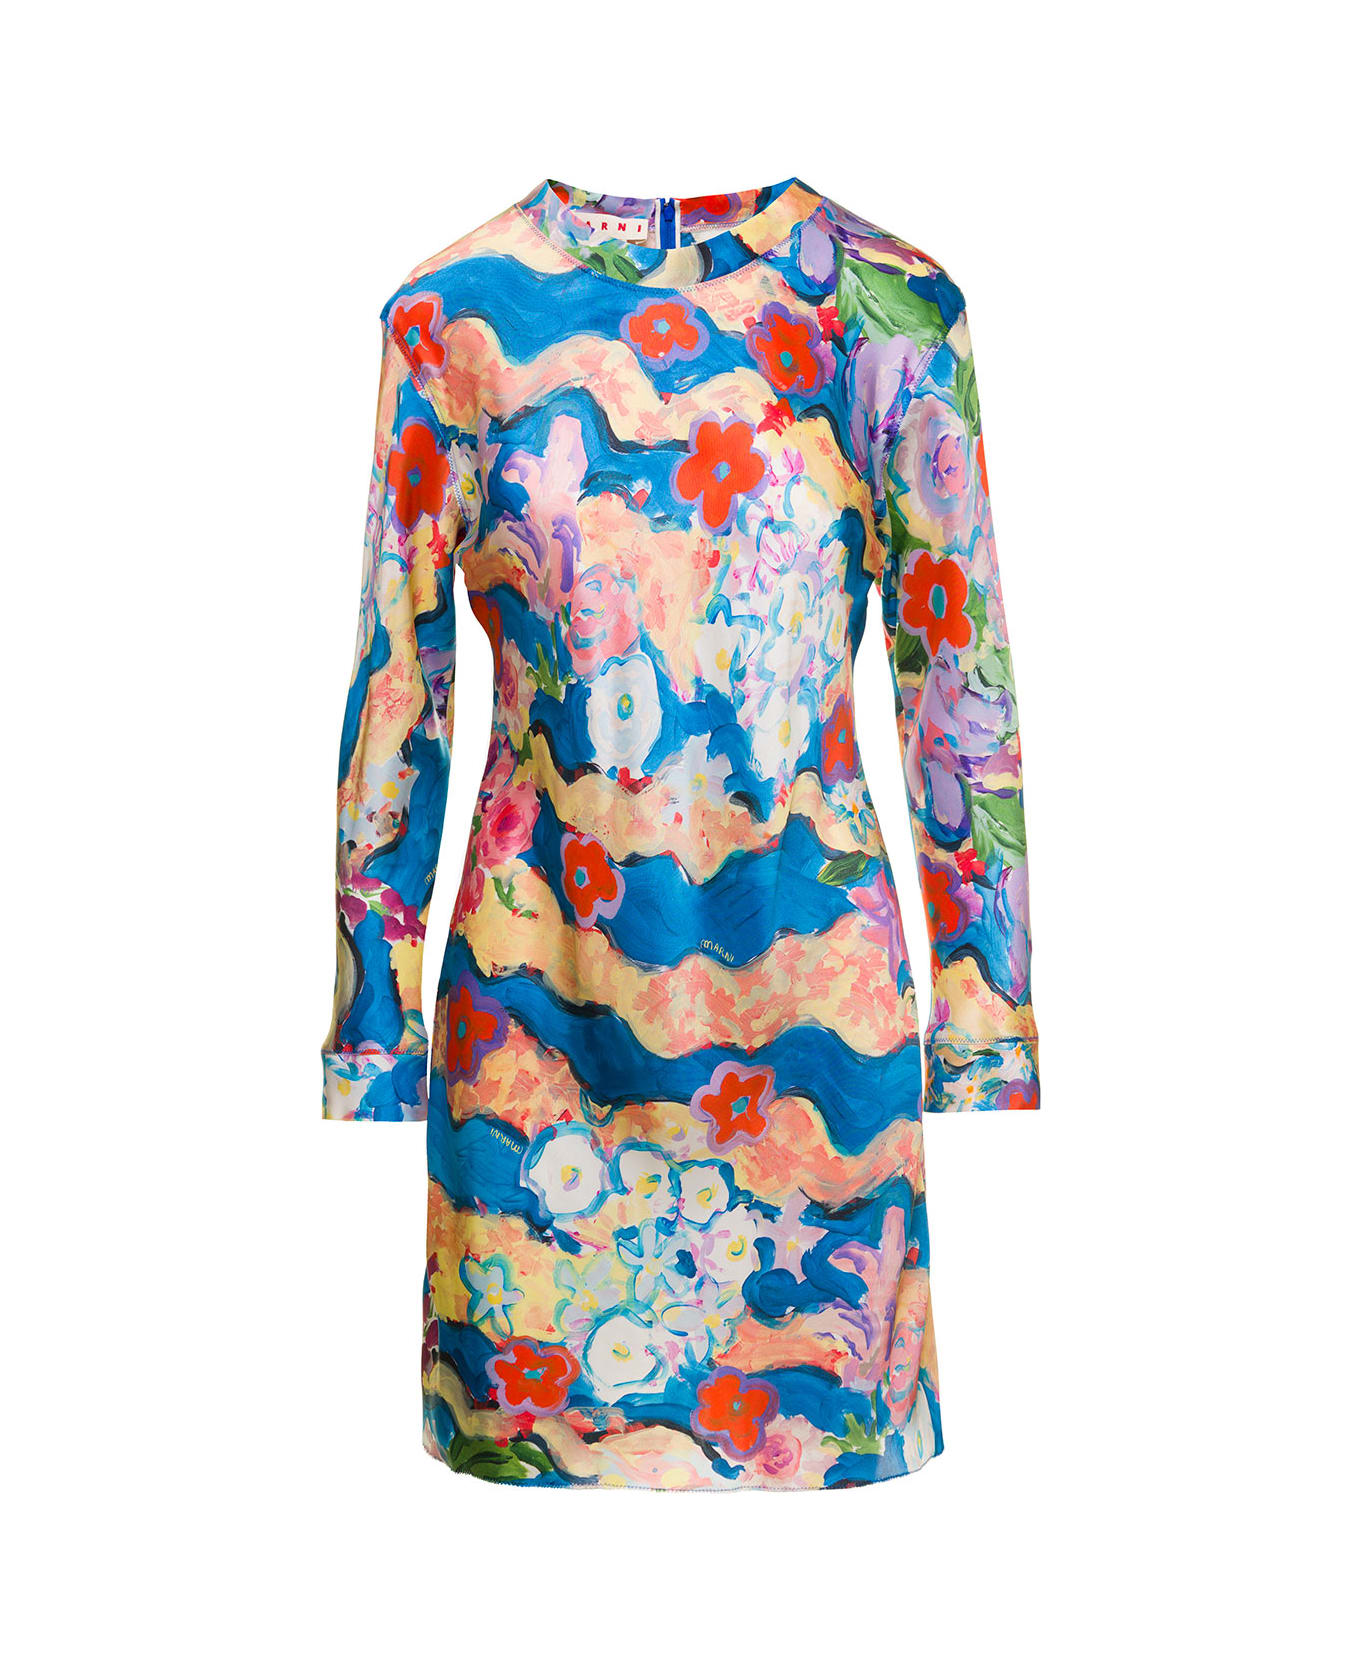 Marni Multicolor Long Sleeves Mini Dress With Julie Print Woman Marni - Multicolor